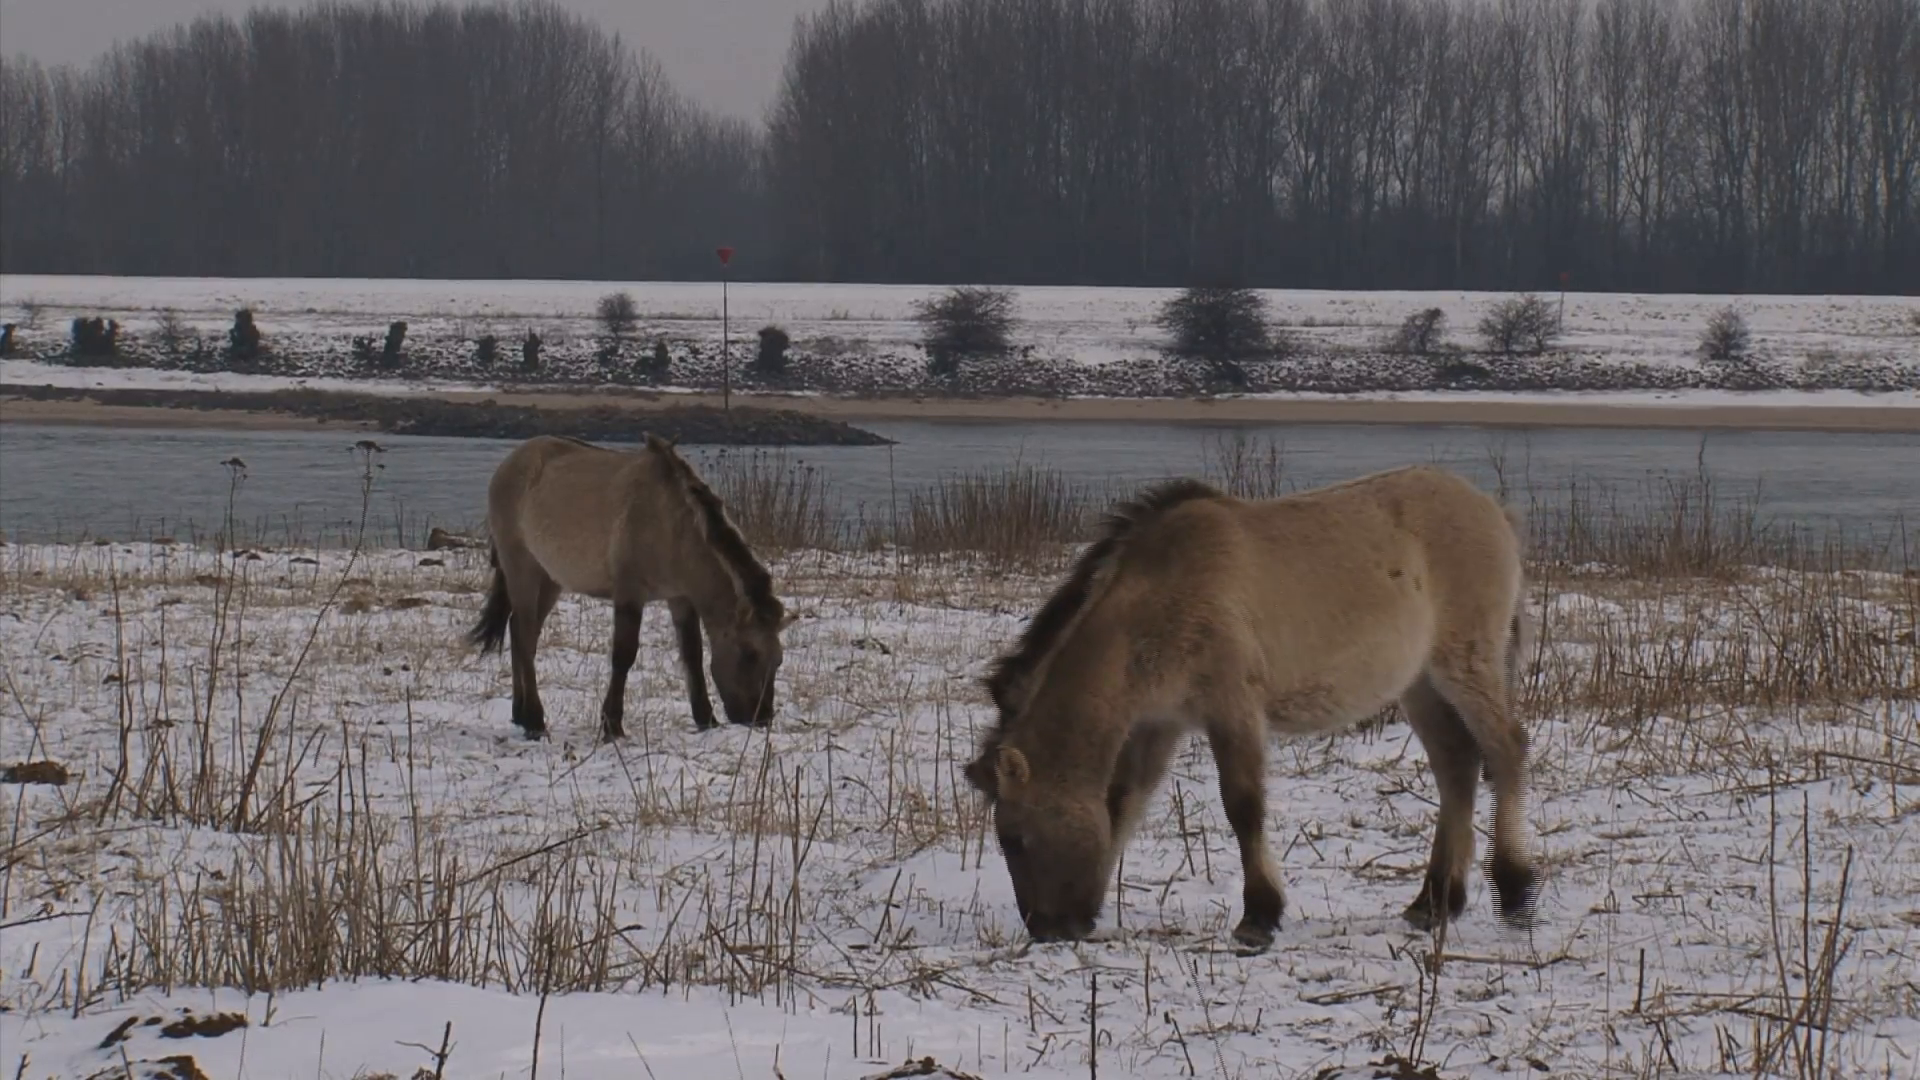 konik horses 2-shot grazing in snow covered river foreland - river ...